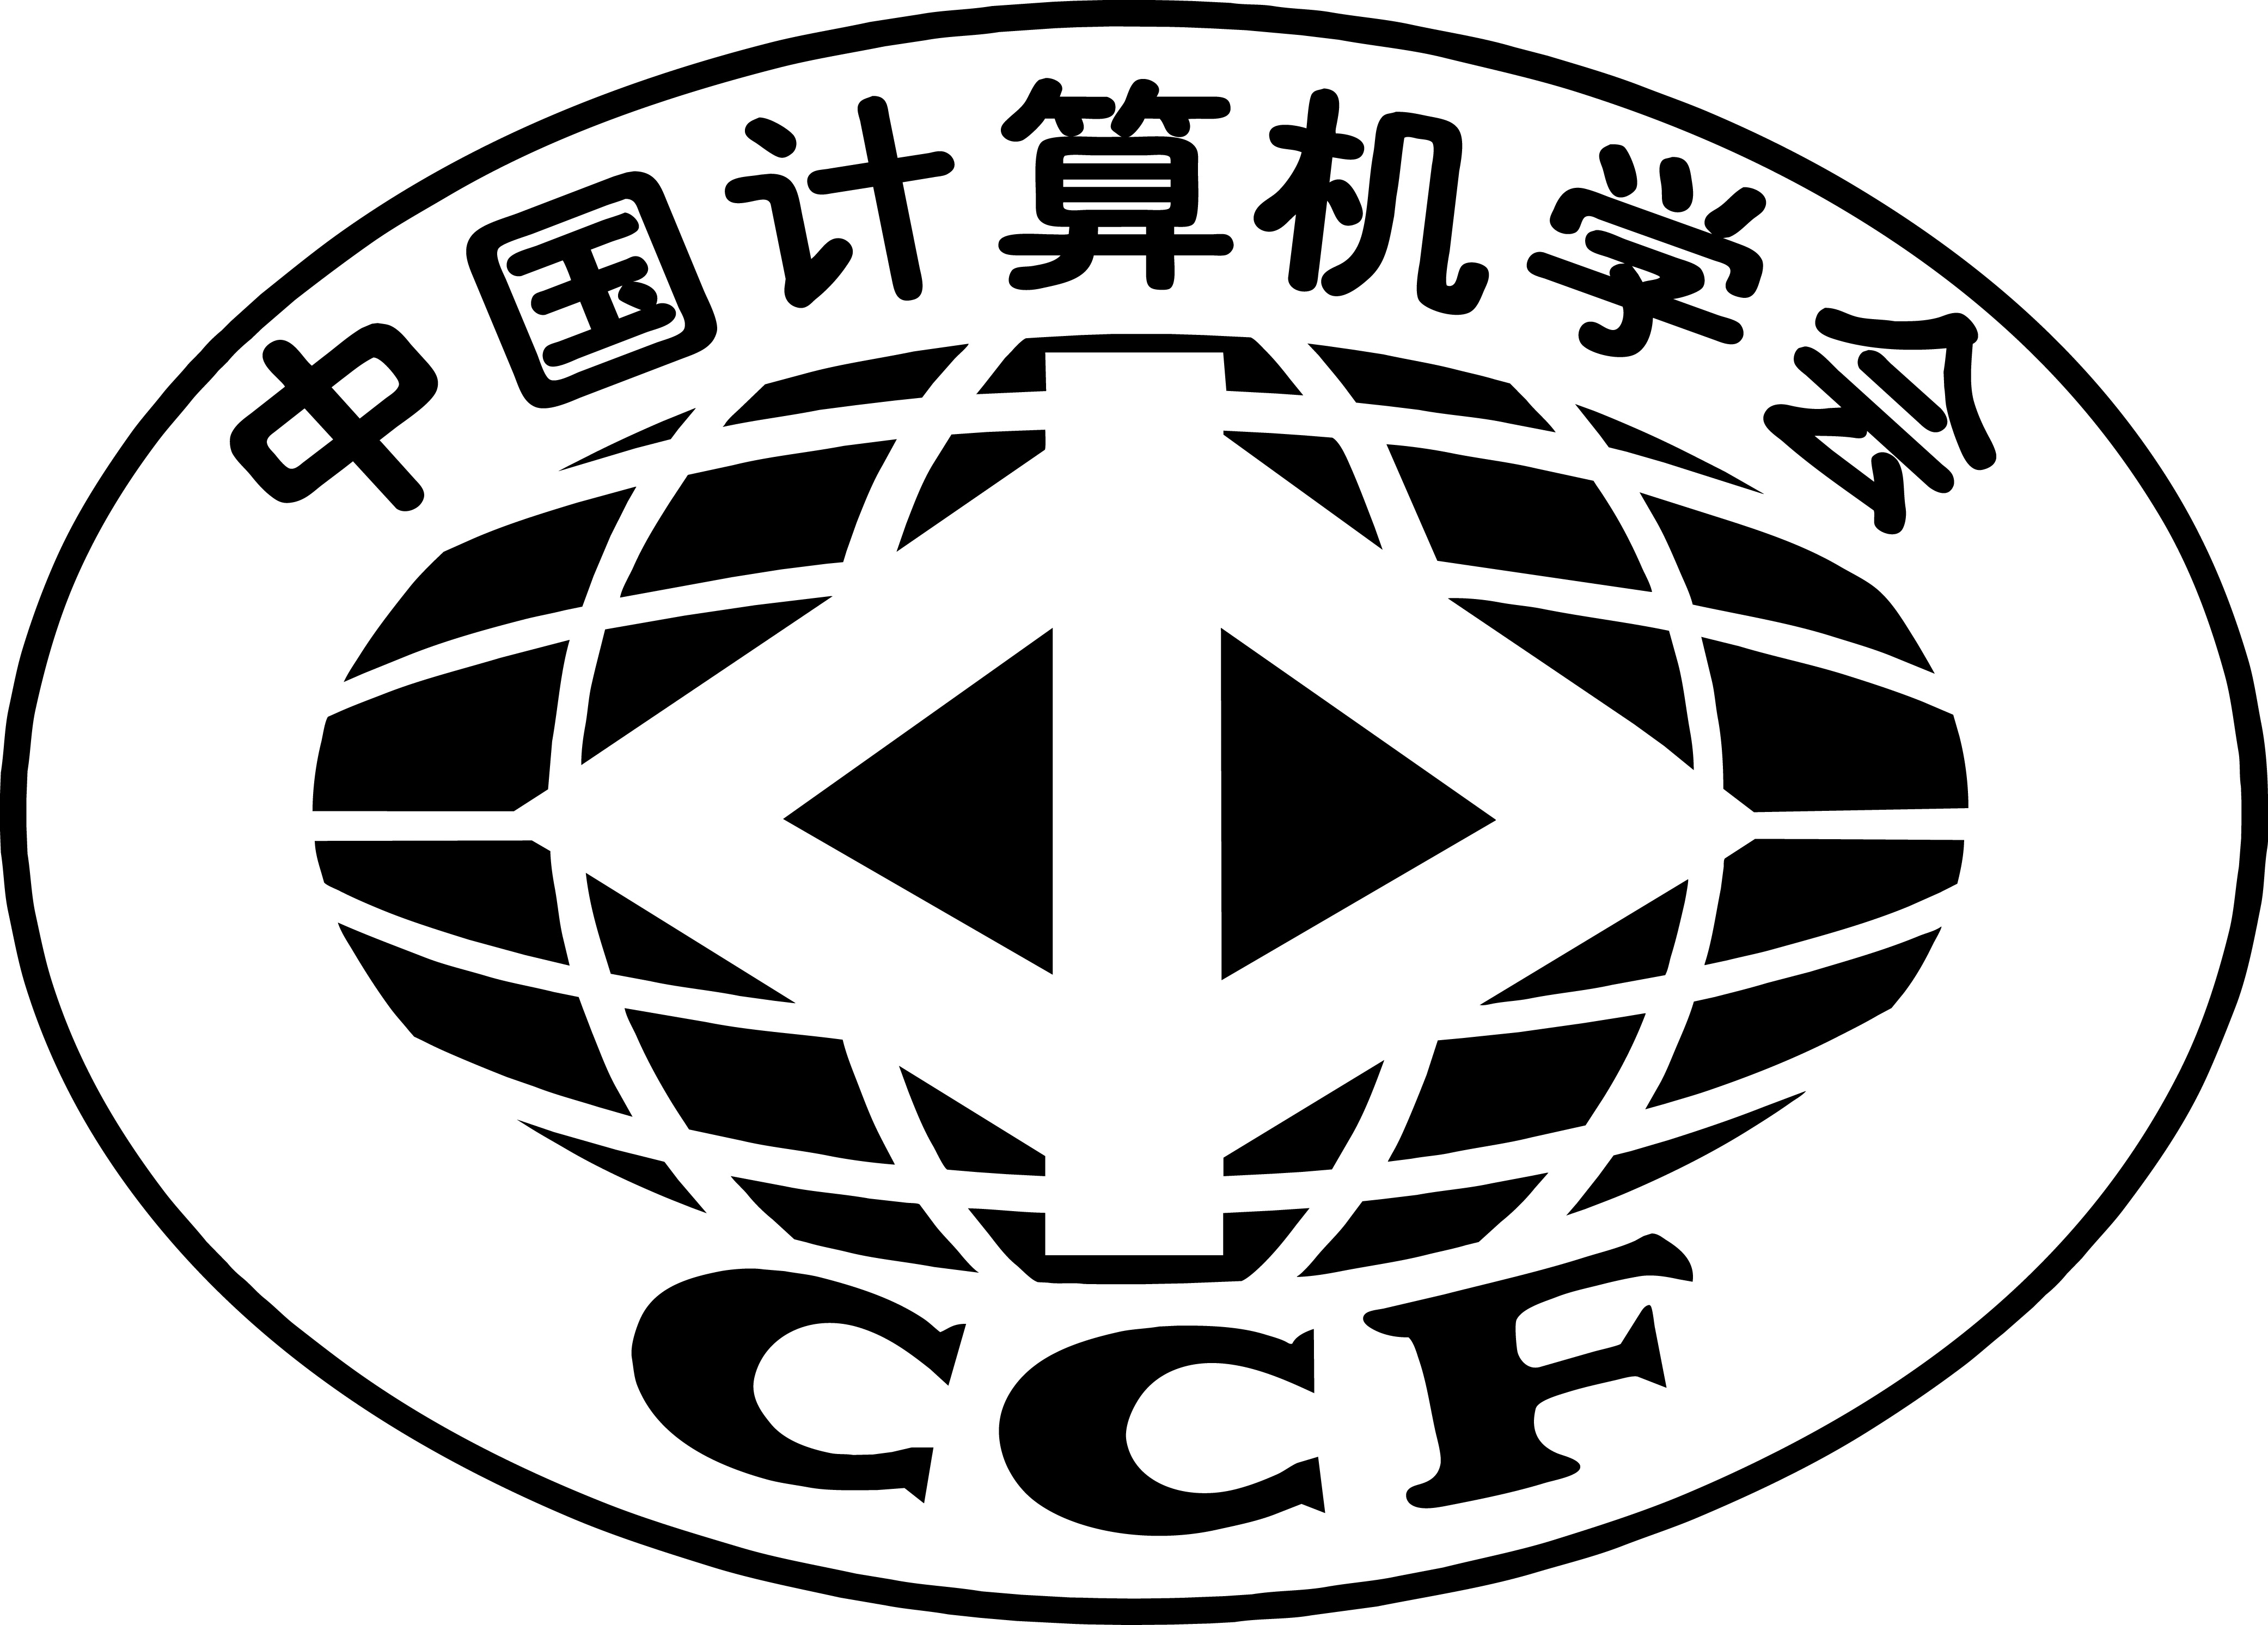 the China Computer Federation (CCF)